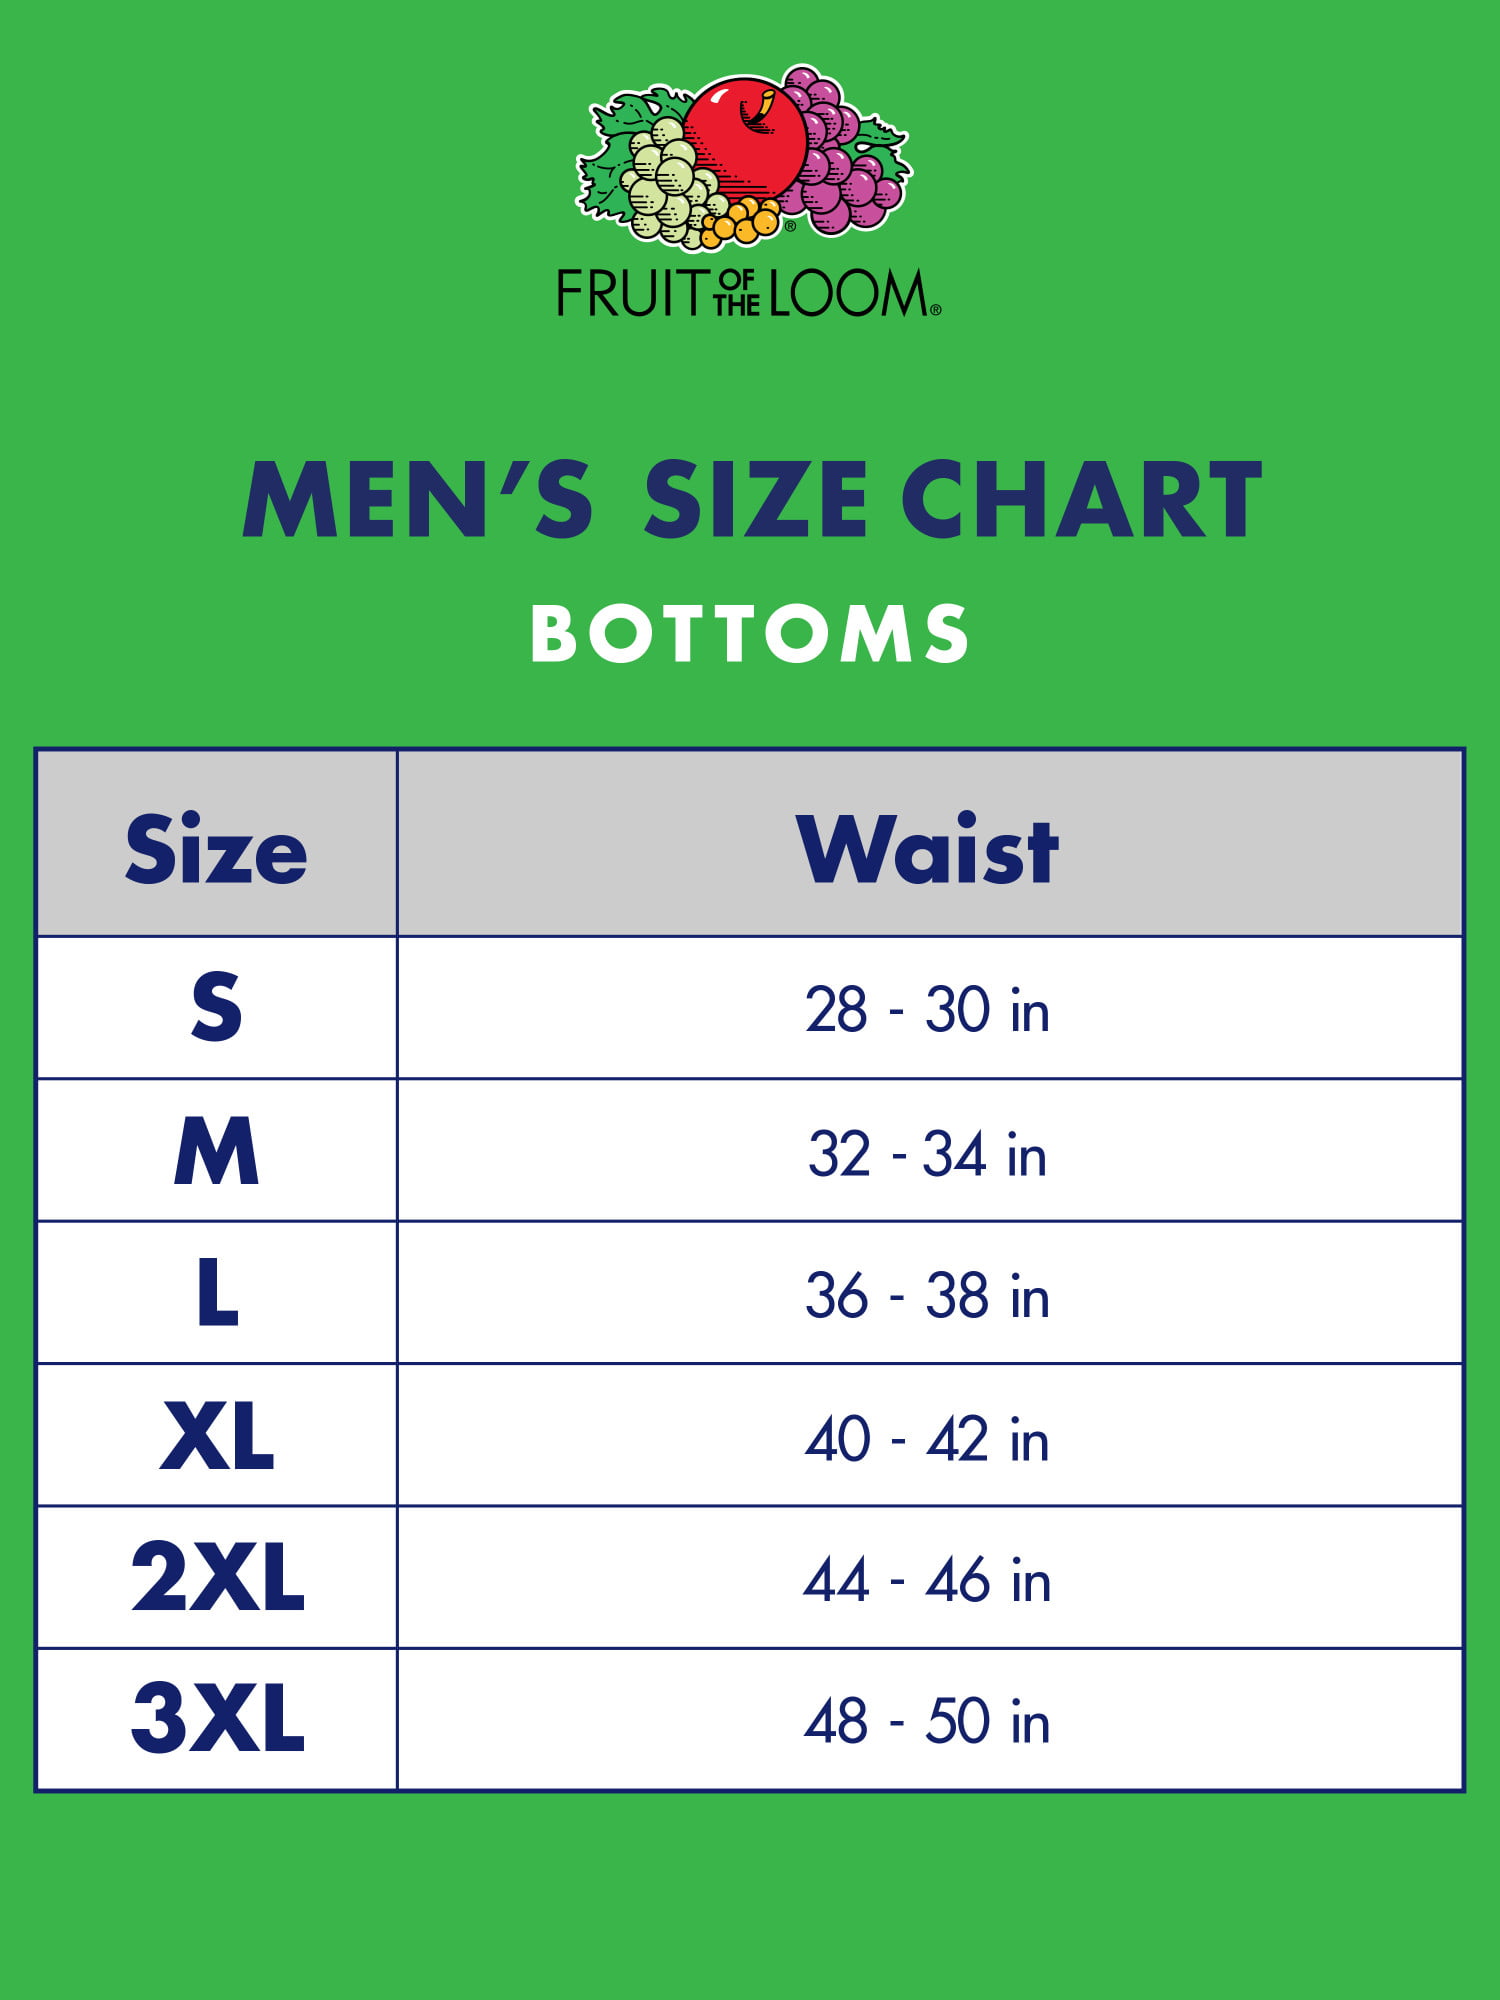 Fruit Of The Loom Bra Size Chart - Greenbushfarm.com